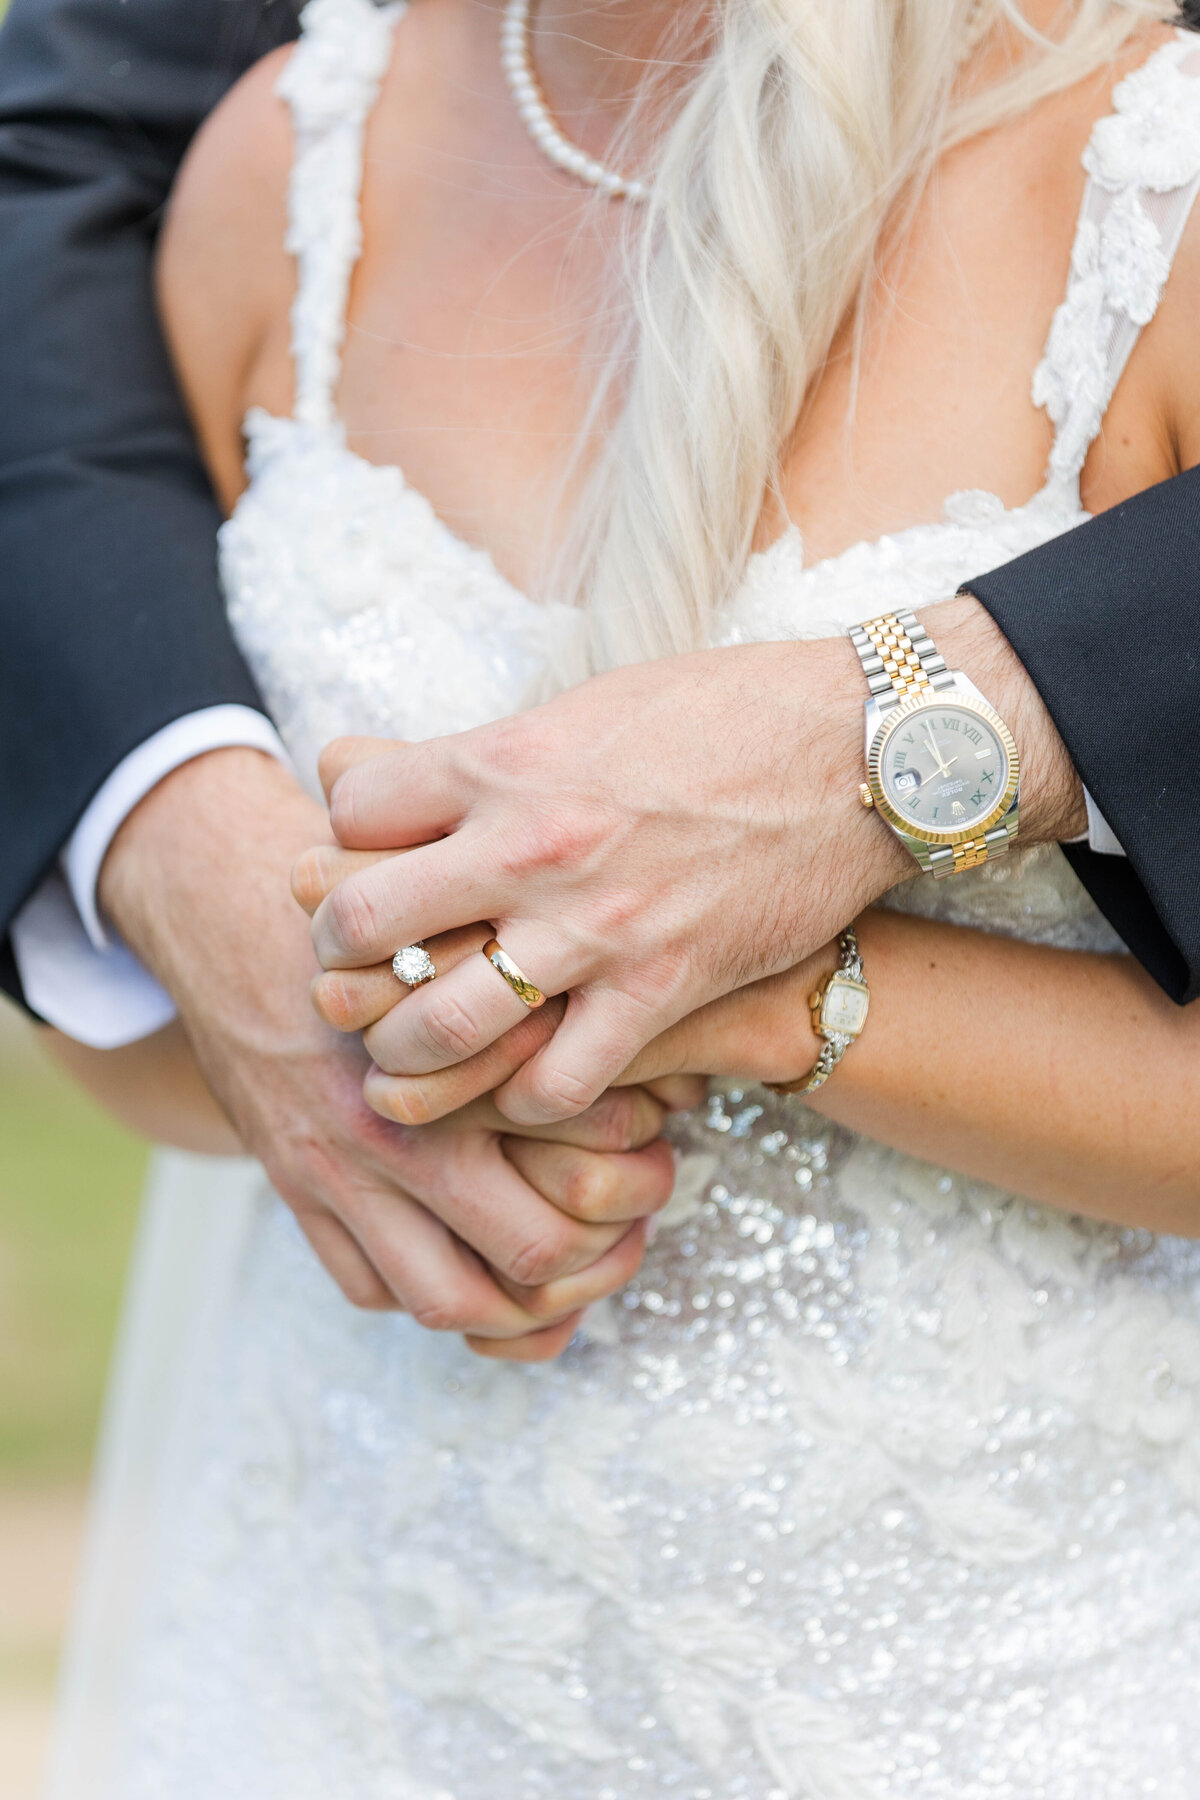 bride-and-groom-hands-interlocked